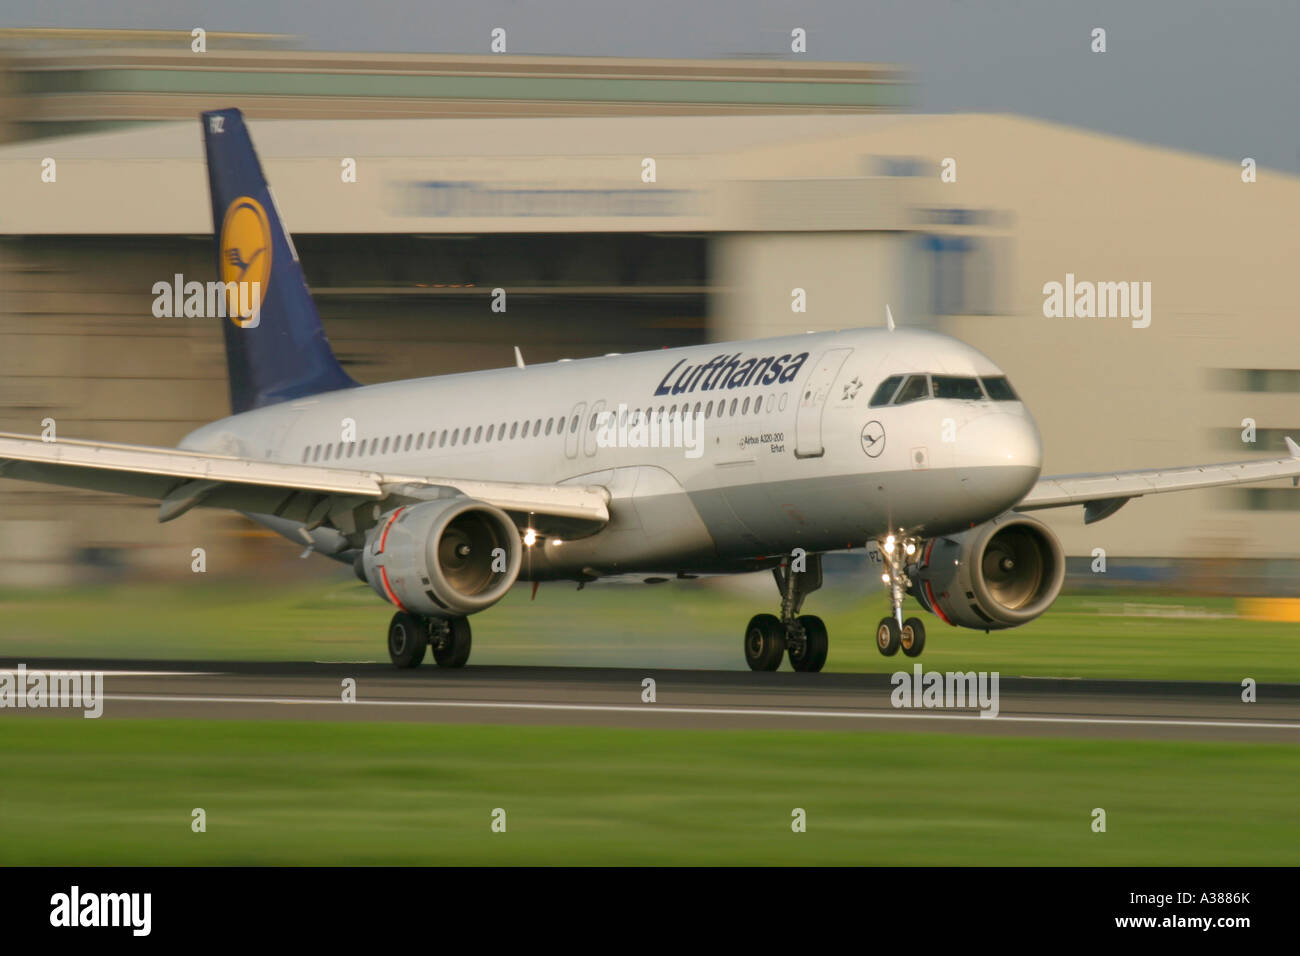 Lufthansa Airbus A320 landing at London Heathrow Airport Stock Photo